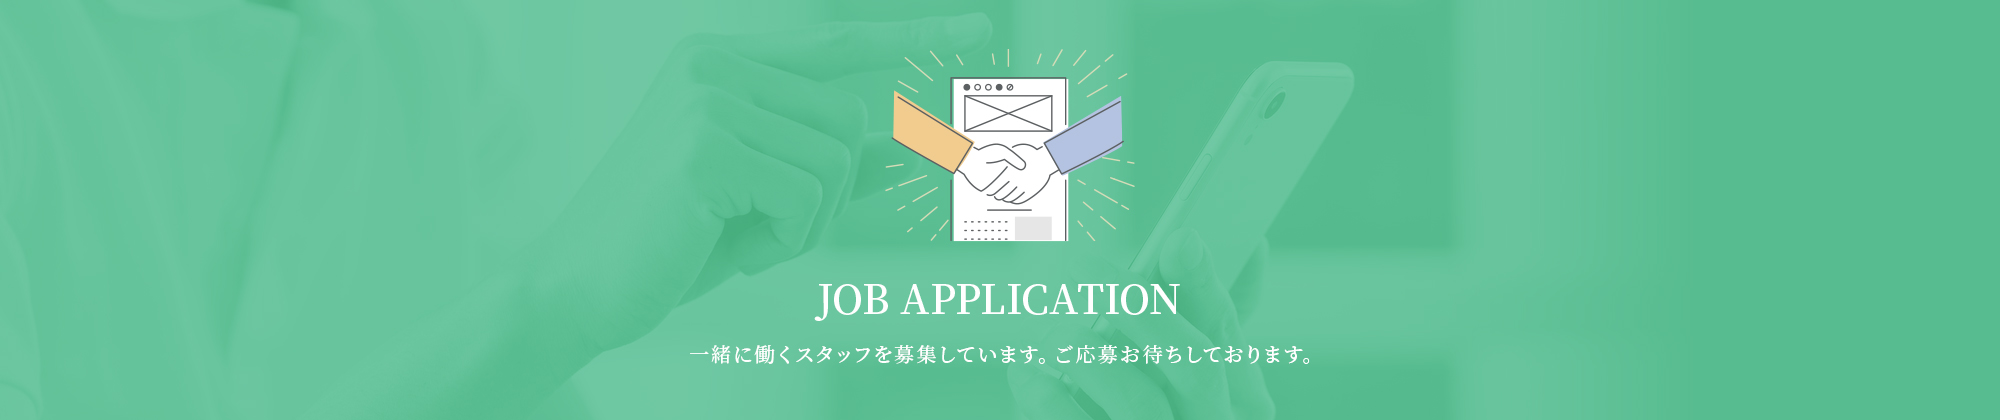 application_banner